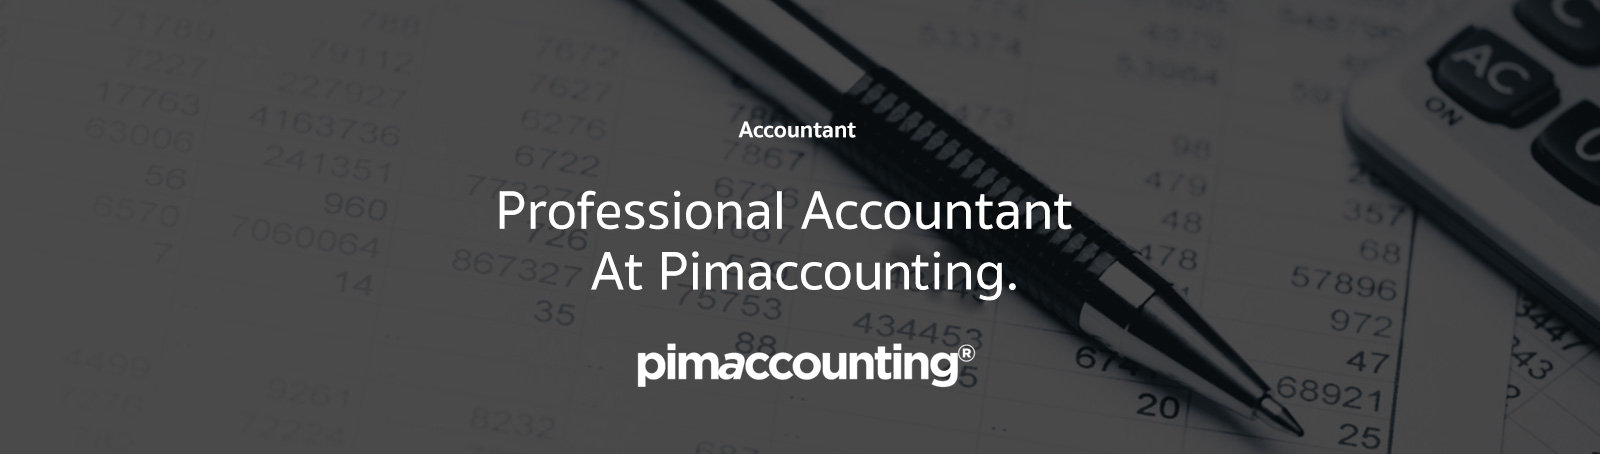 Professional Accountant At Pimaccounting